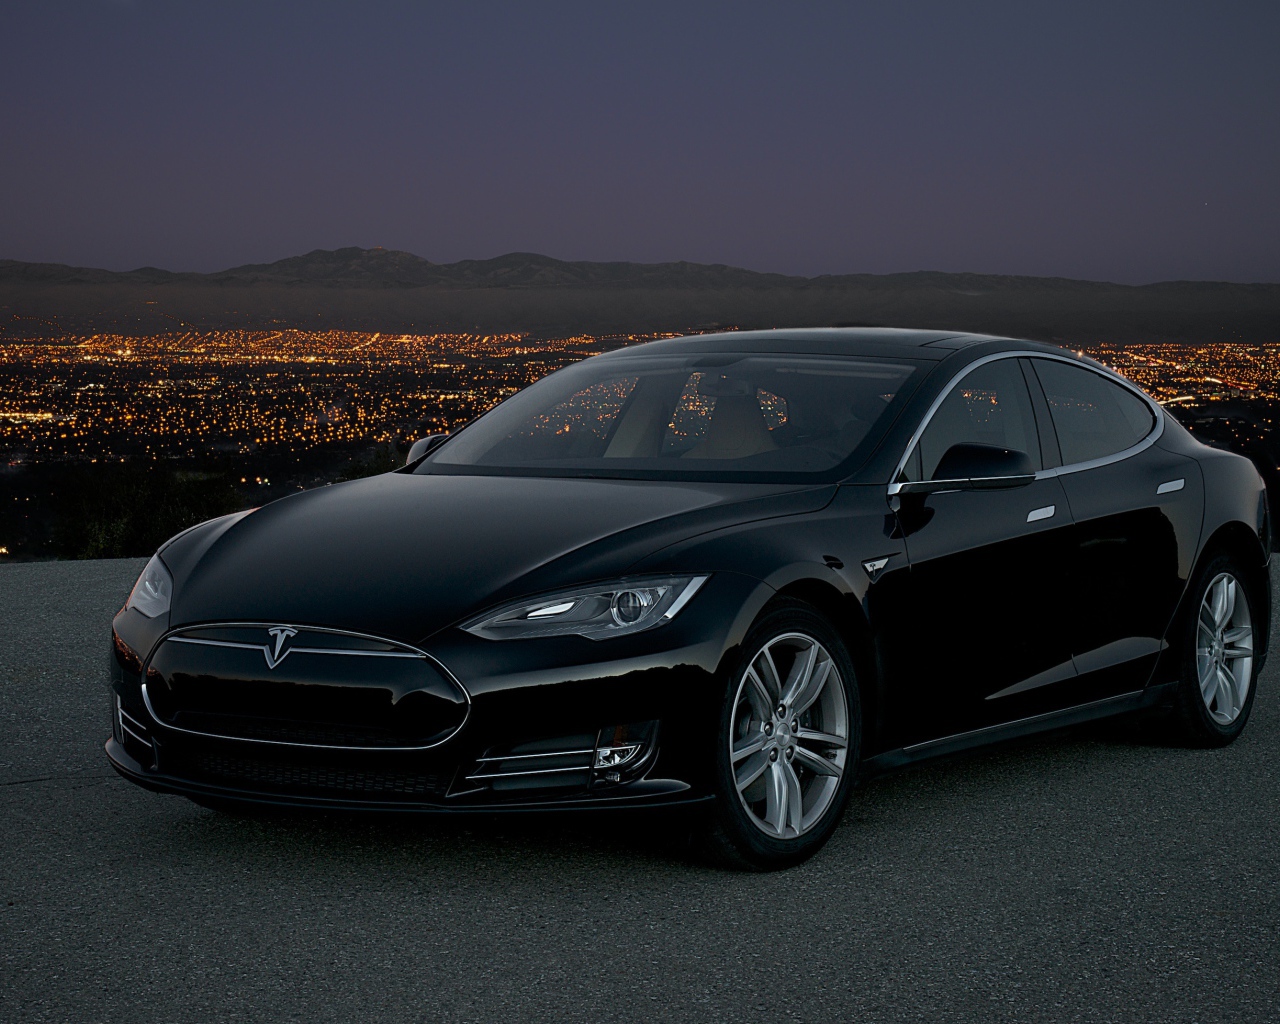 Black stylish electric Tesla Model S on the background of night city